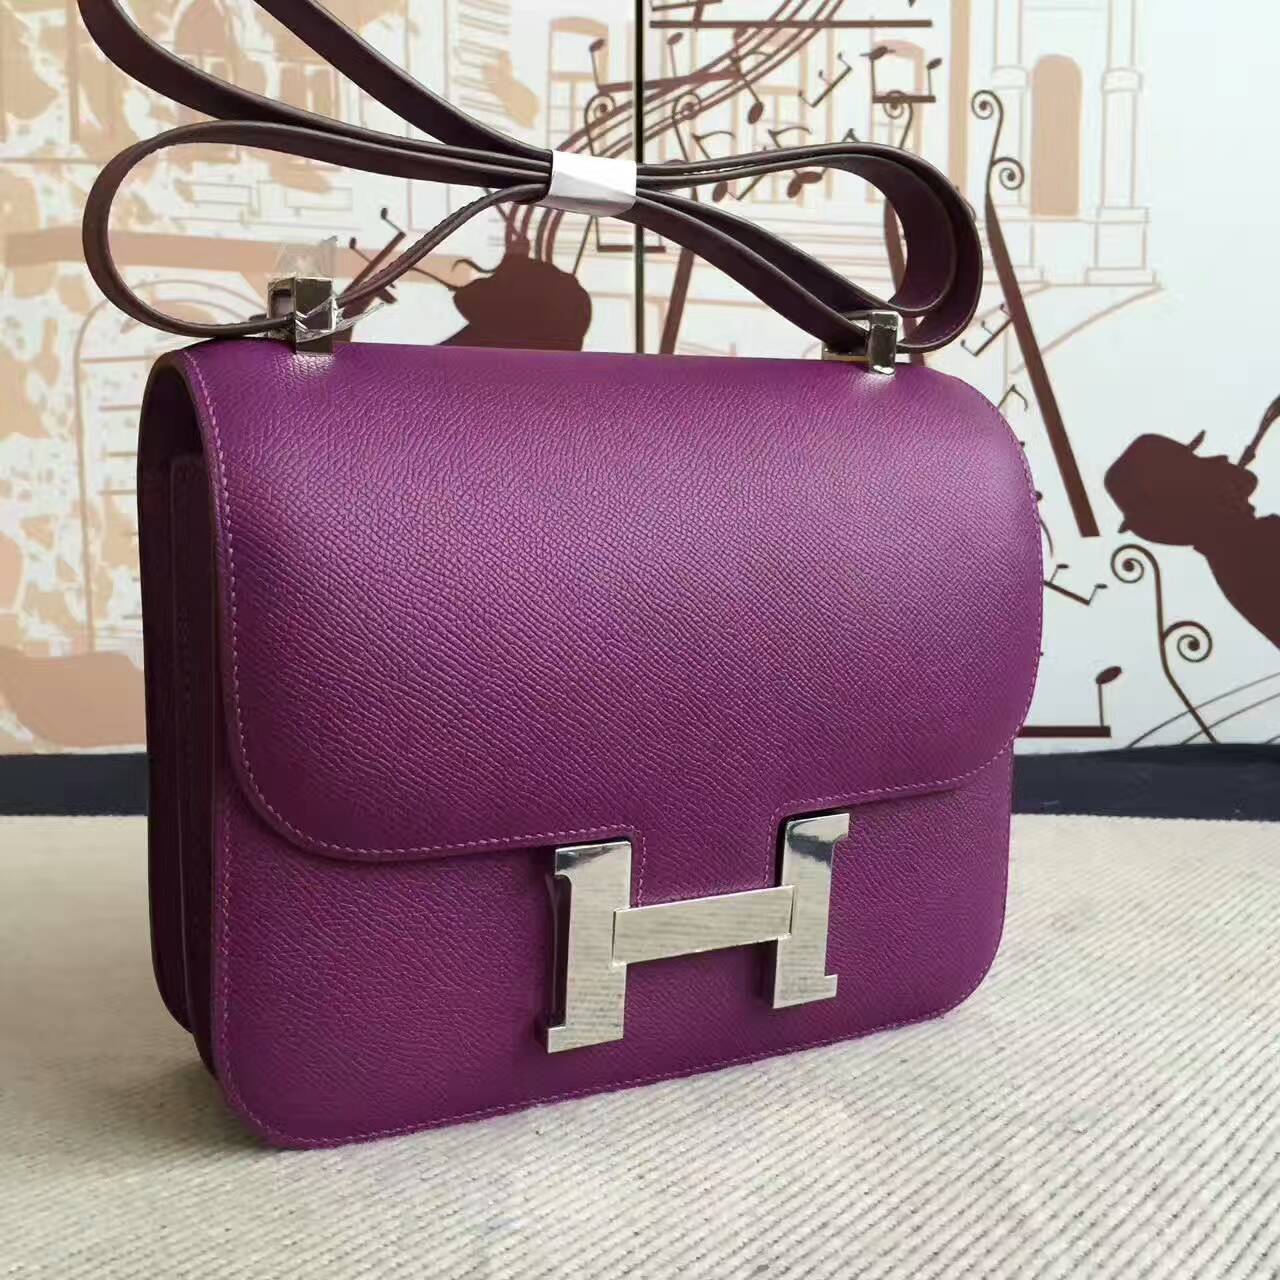 Discount Hermes P9 Anemone Purple Epsom Leather Constance Bag 24cm